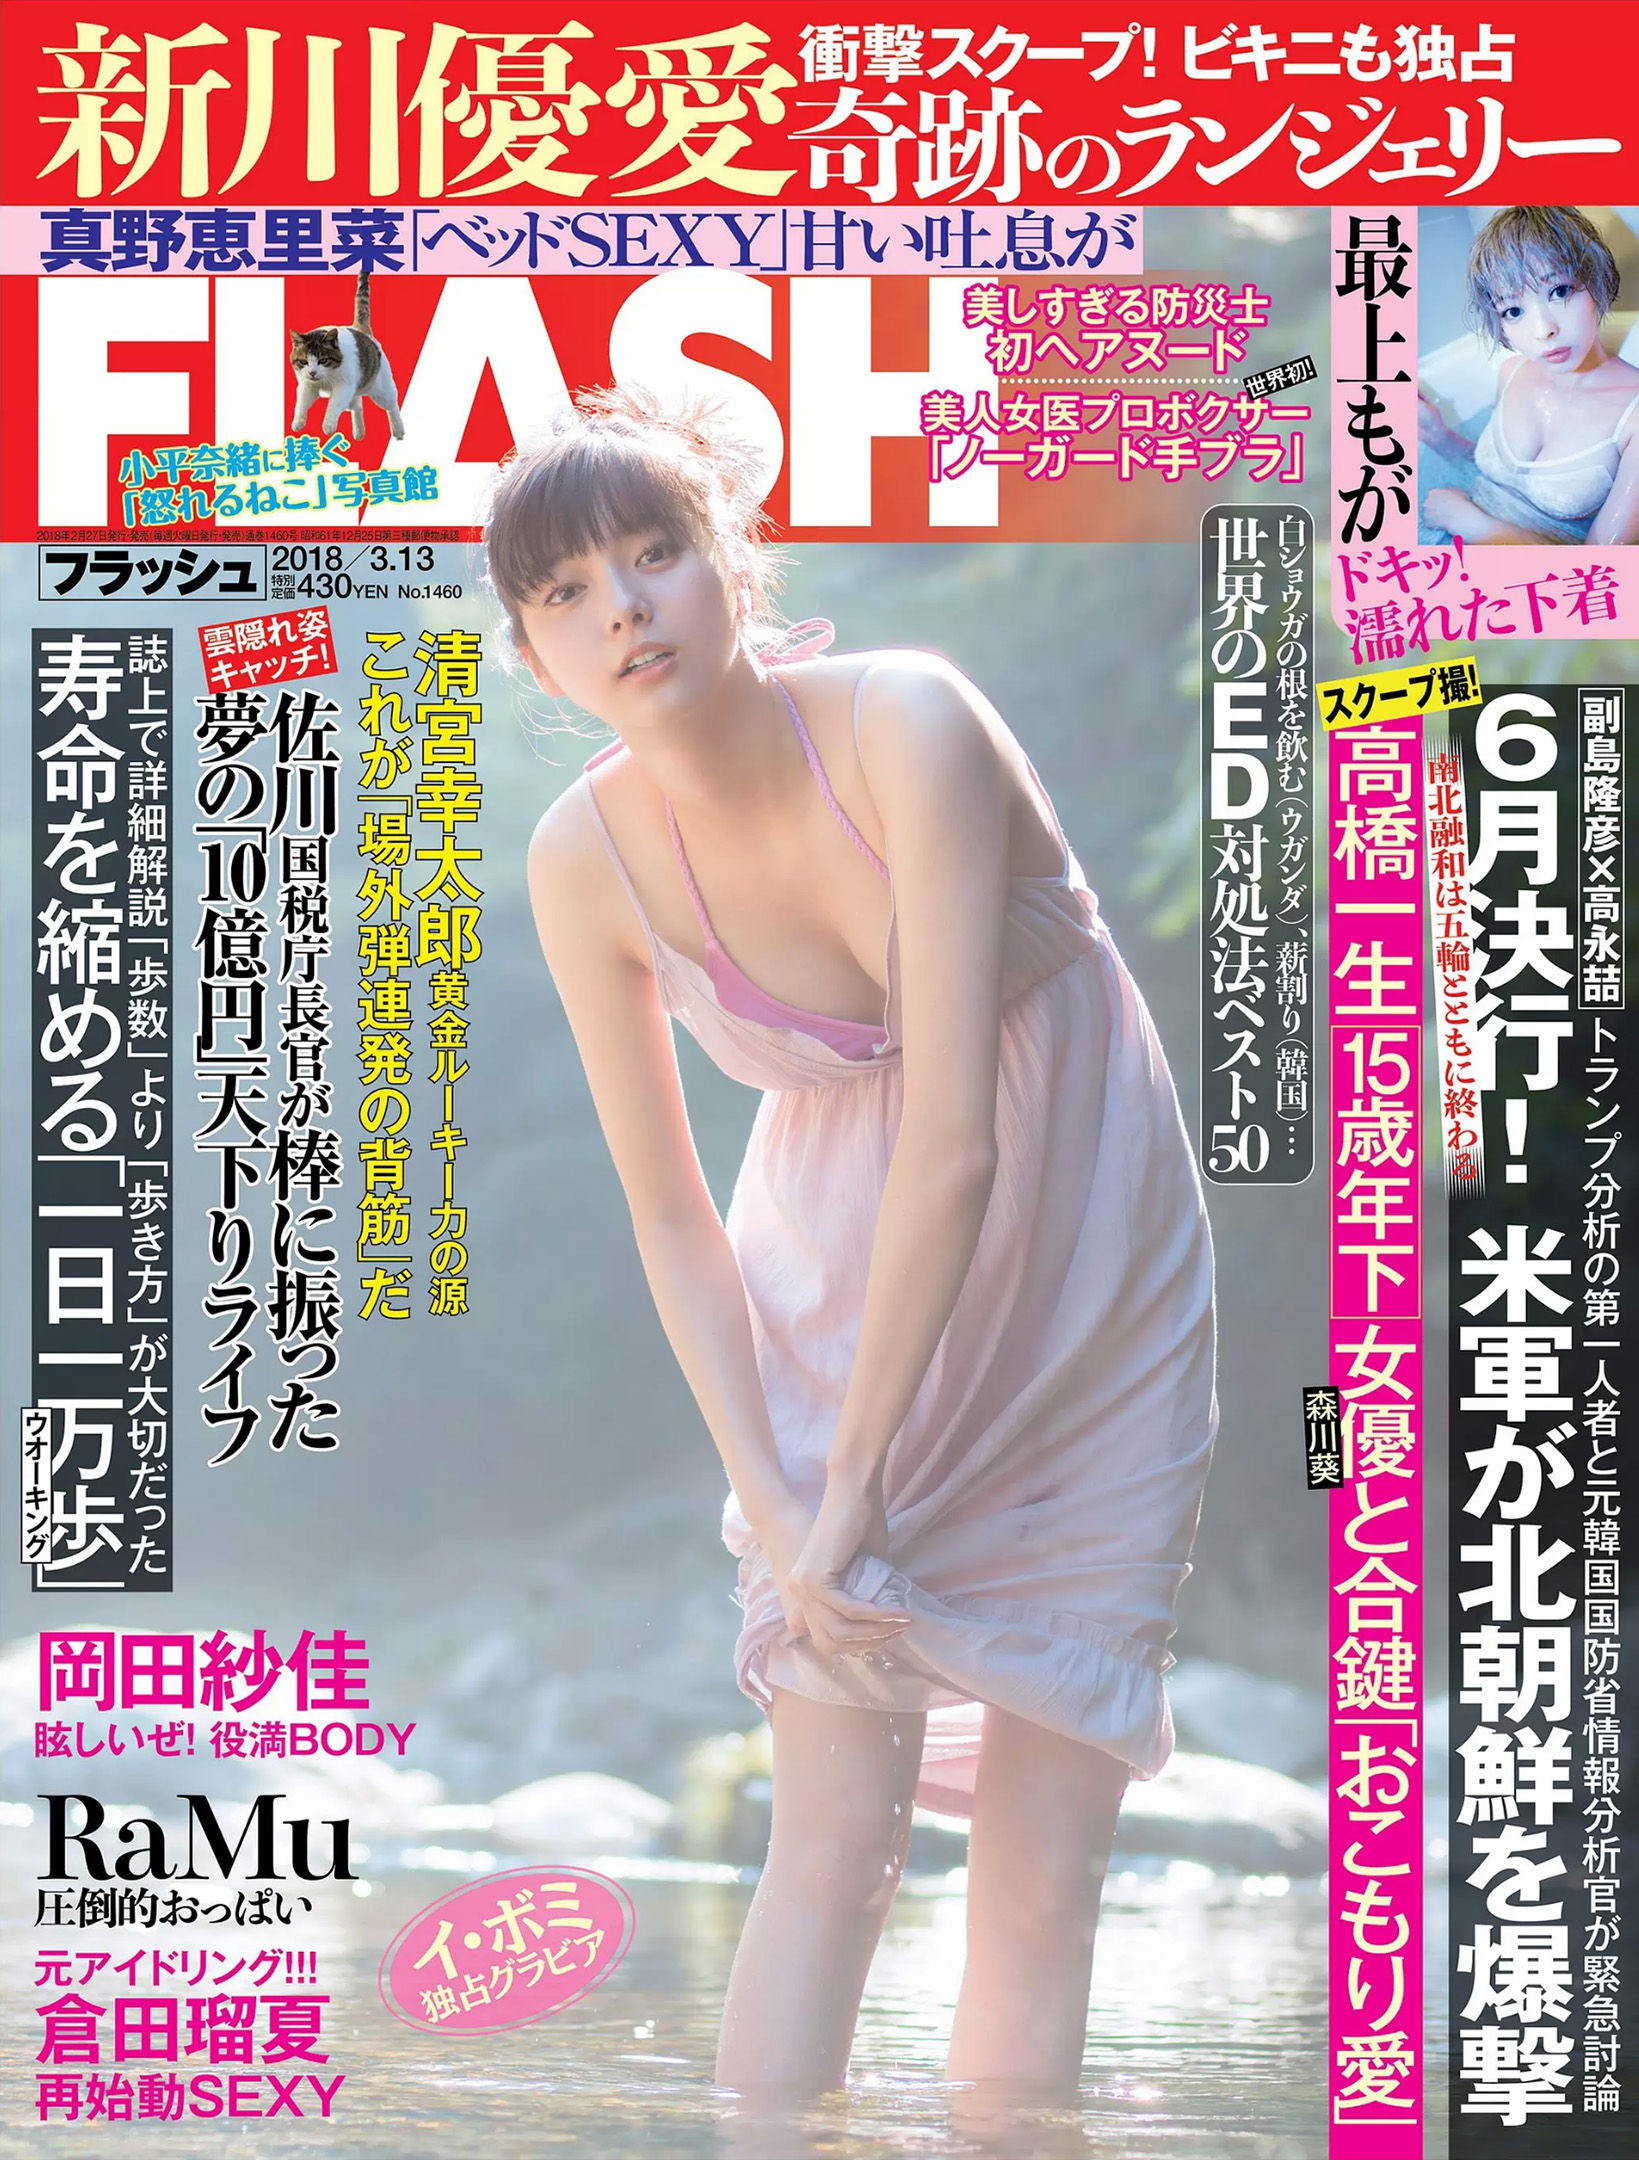 [FLASH]杂志:新川优爱高品质私家拍摄作品在线浏览(23P)